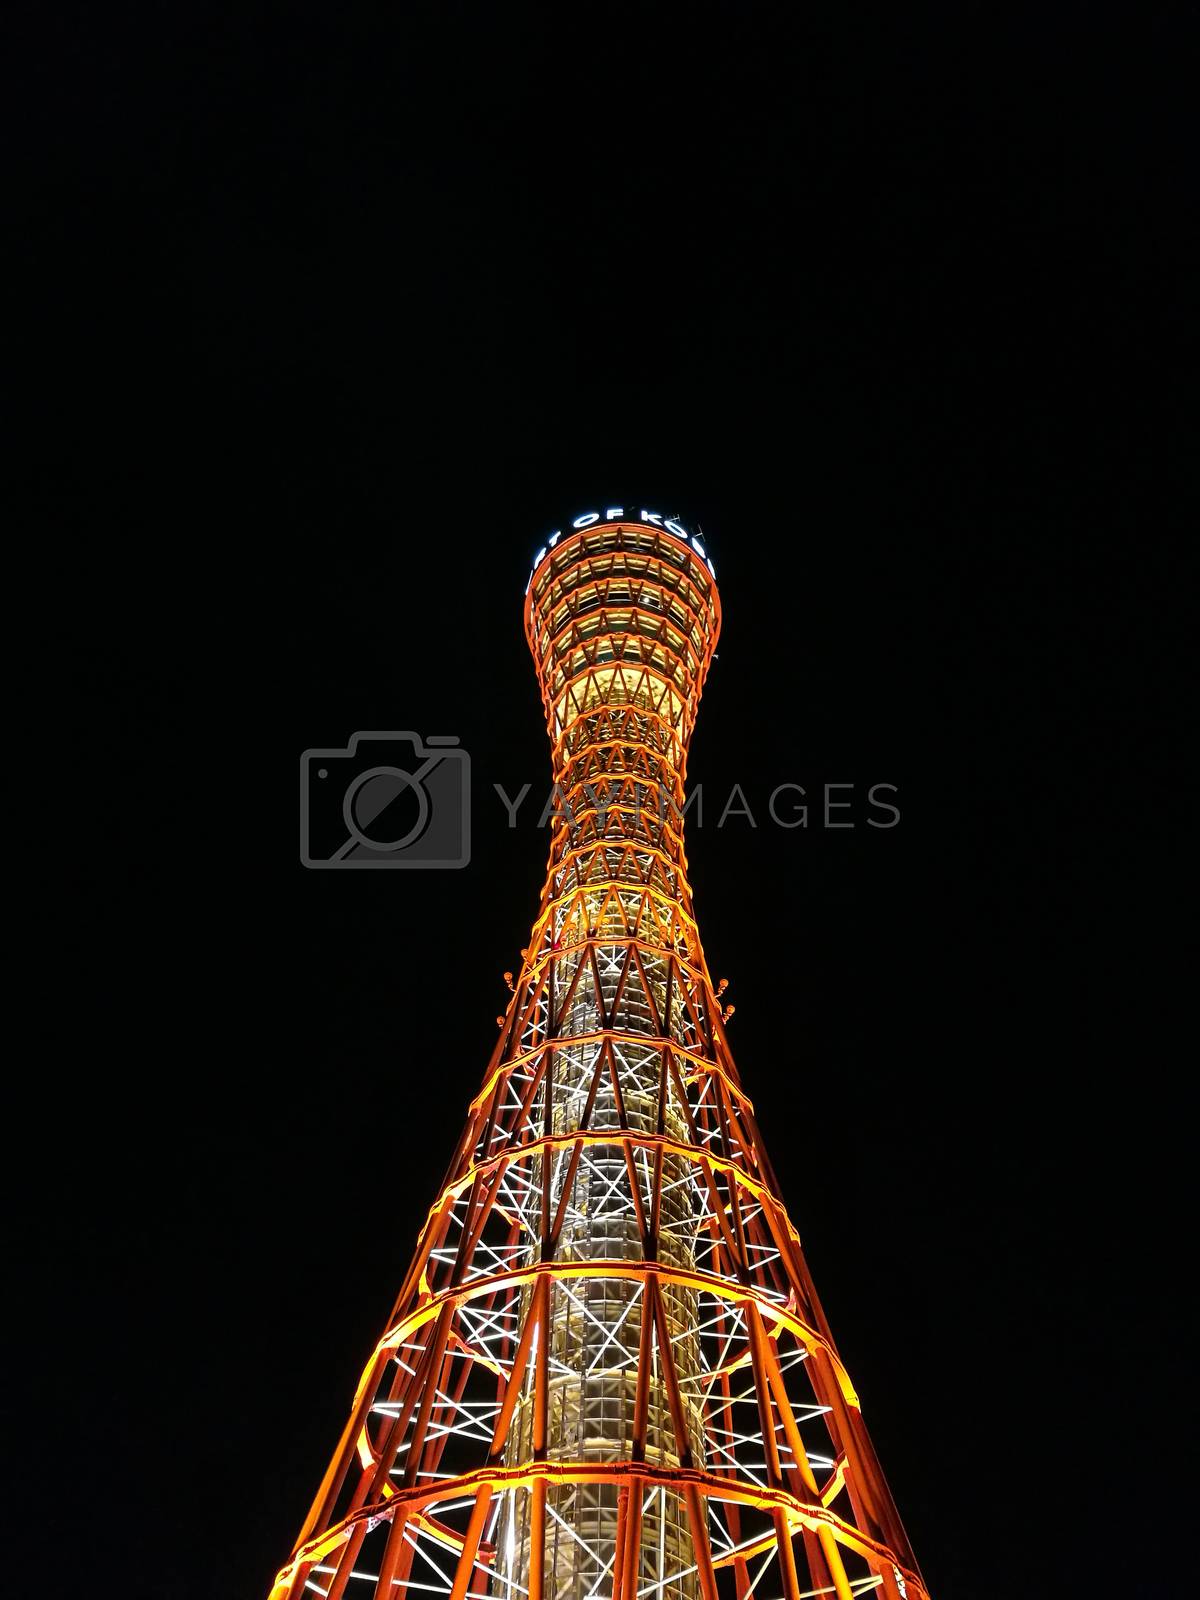 Royalty free image of Tall Kobe tower in Kobe Japan at night time by eyeofpaul